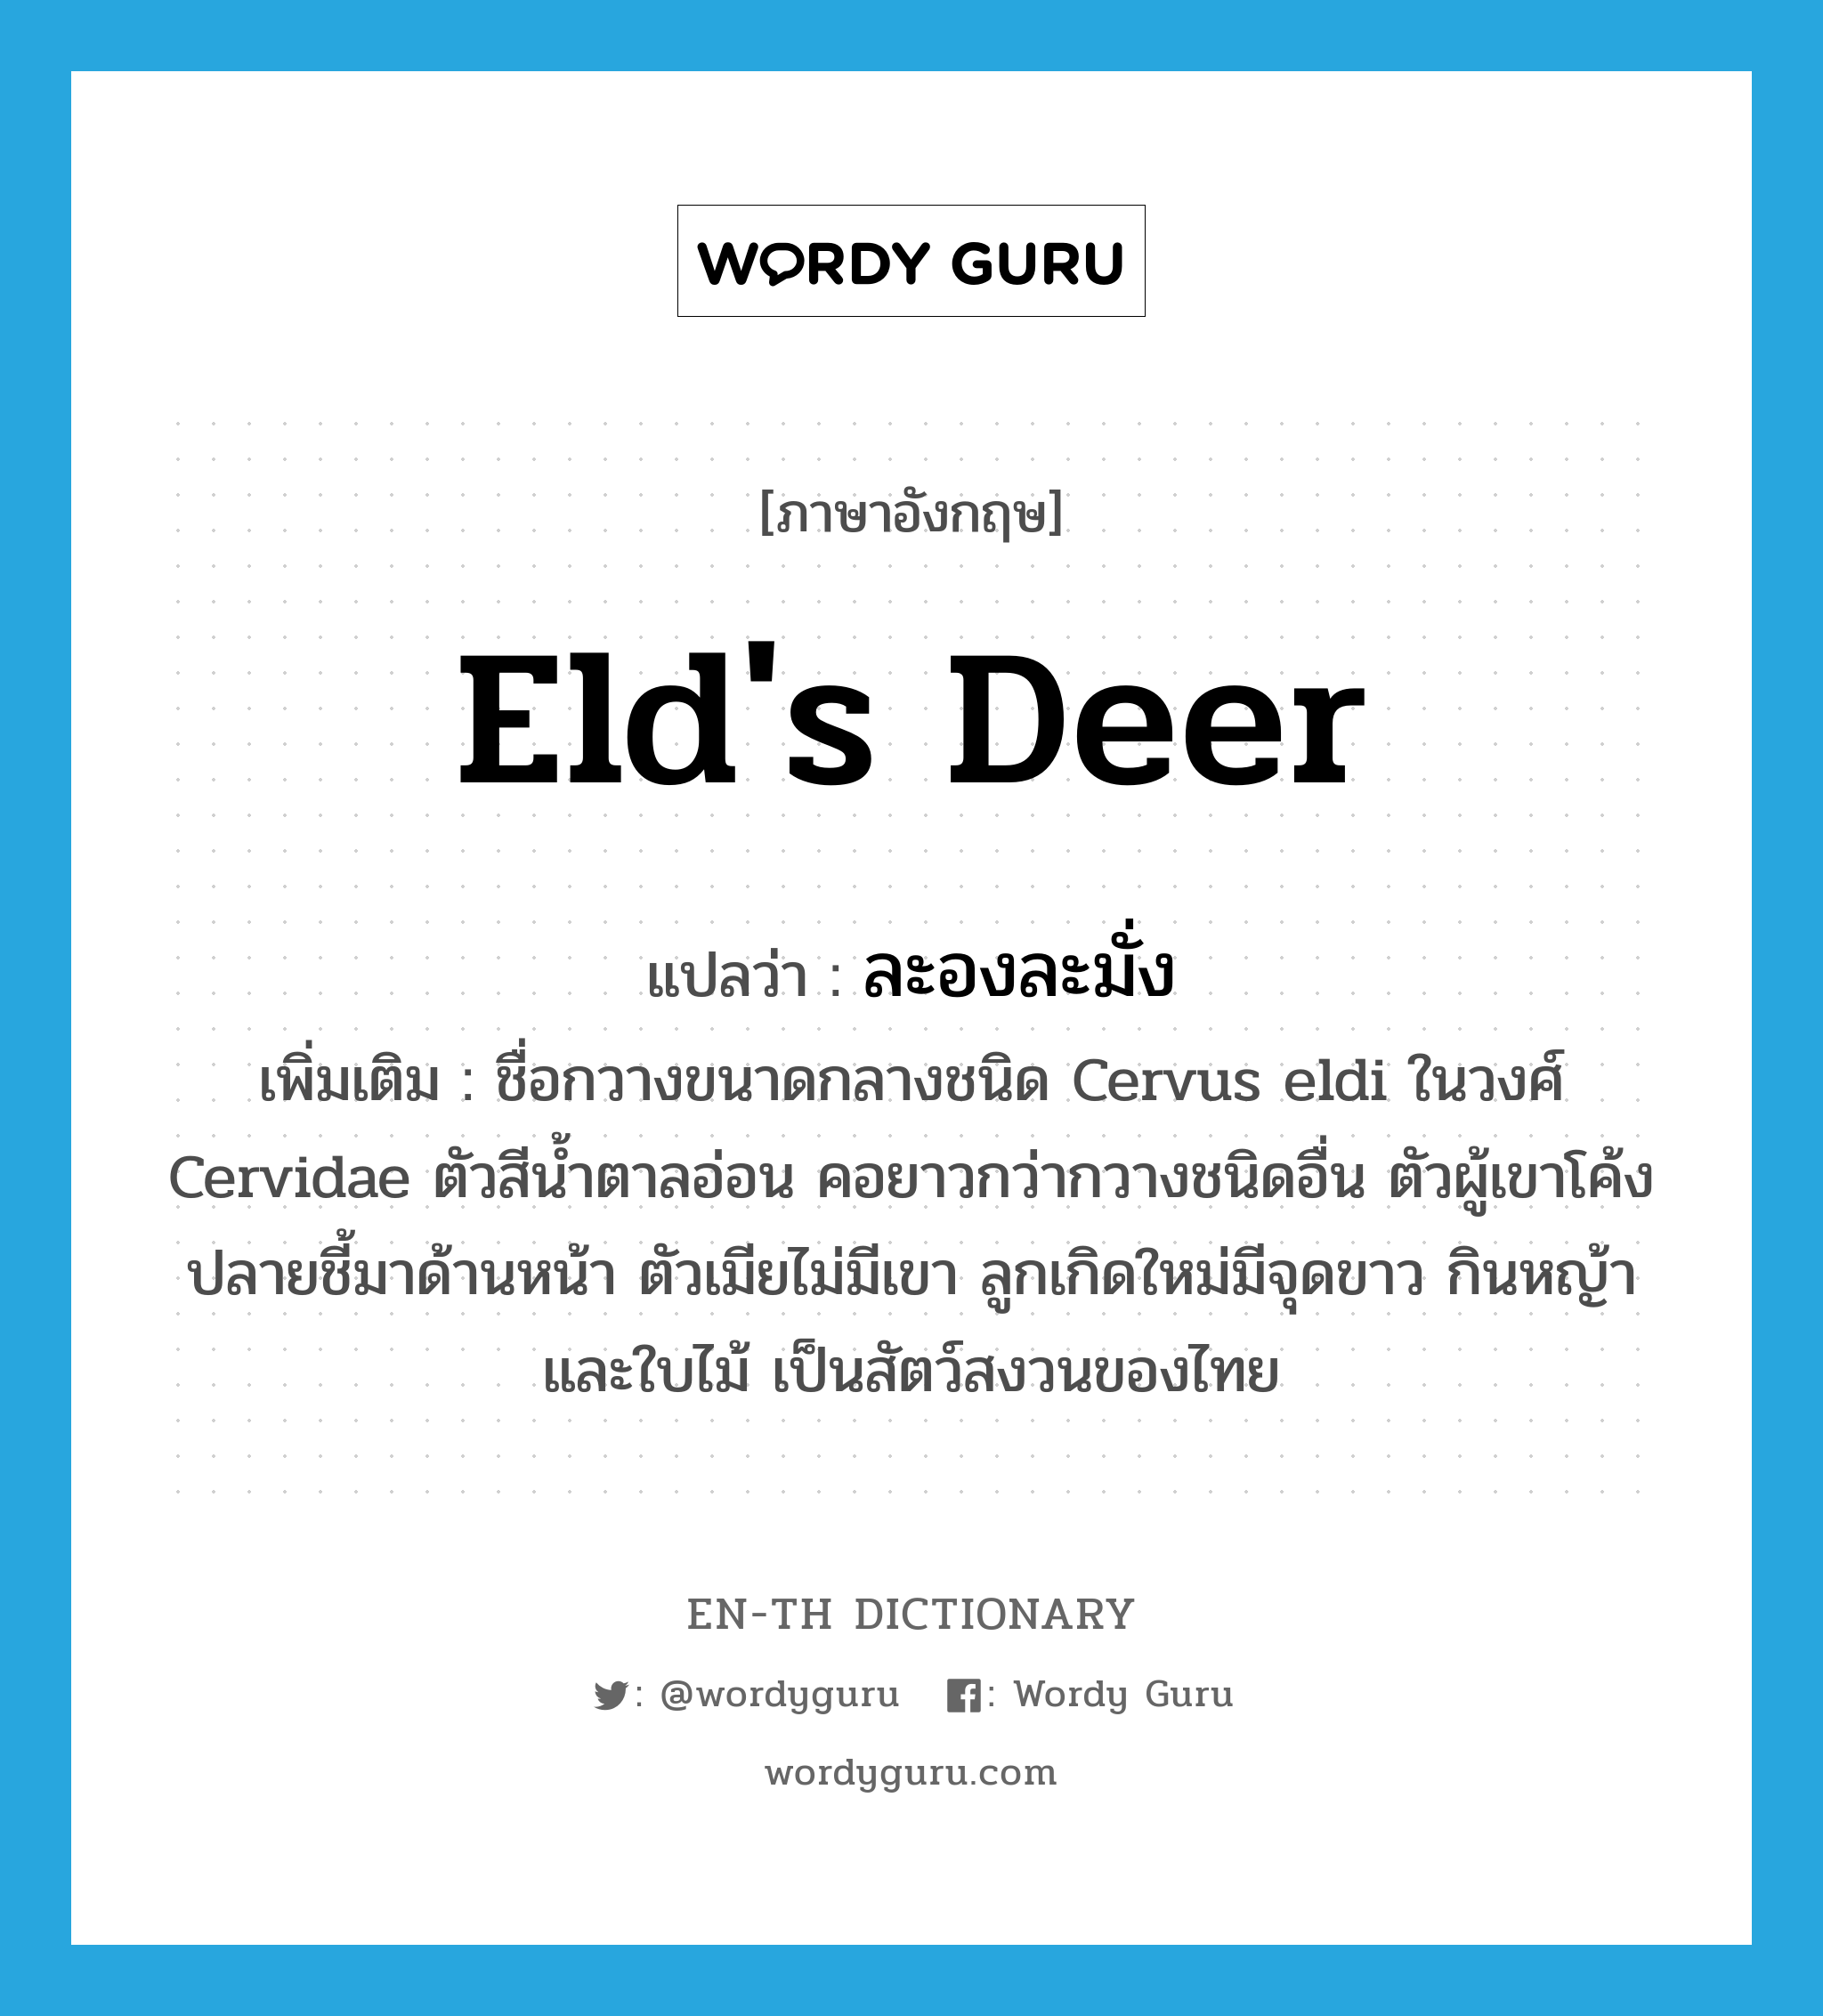 Eld's deer แปลว่า?, คำศัพท์ภาษาอังกฤษ Eld's deer แปลว่า ละองละมั่ง ประเภท N เพิ่มเติม ชื่อกวางขนาดกลางชนิด Cervus eldi ในวงศ์ Cervidae ตัวสีน้ำตาลอ่อน คอยาวกว่ากวางชนิดอื่น ตัวผู้เขาโค้งปลายชี้มาด้านหน้า ตัวเมียไม่มีเขา ลูกเกิดใหม่มีจุดขาว กินหญ้าและใบไม้ เป็นสัตว์สงวนของไทย หมวด N